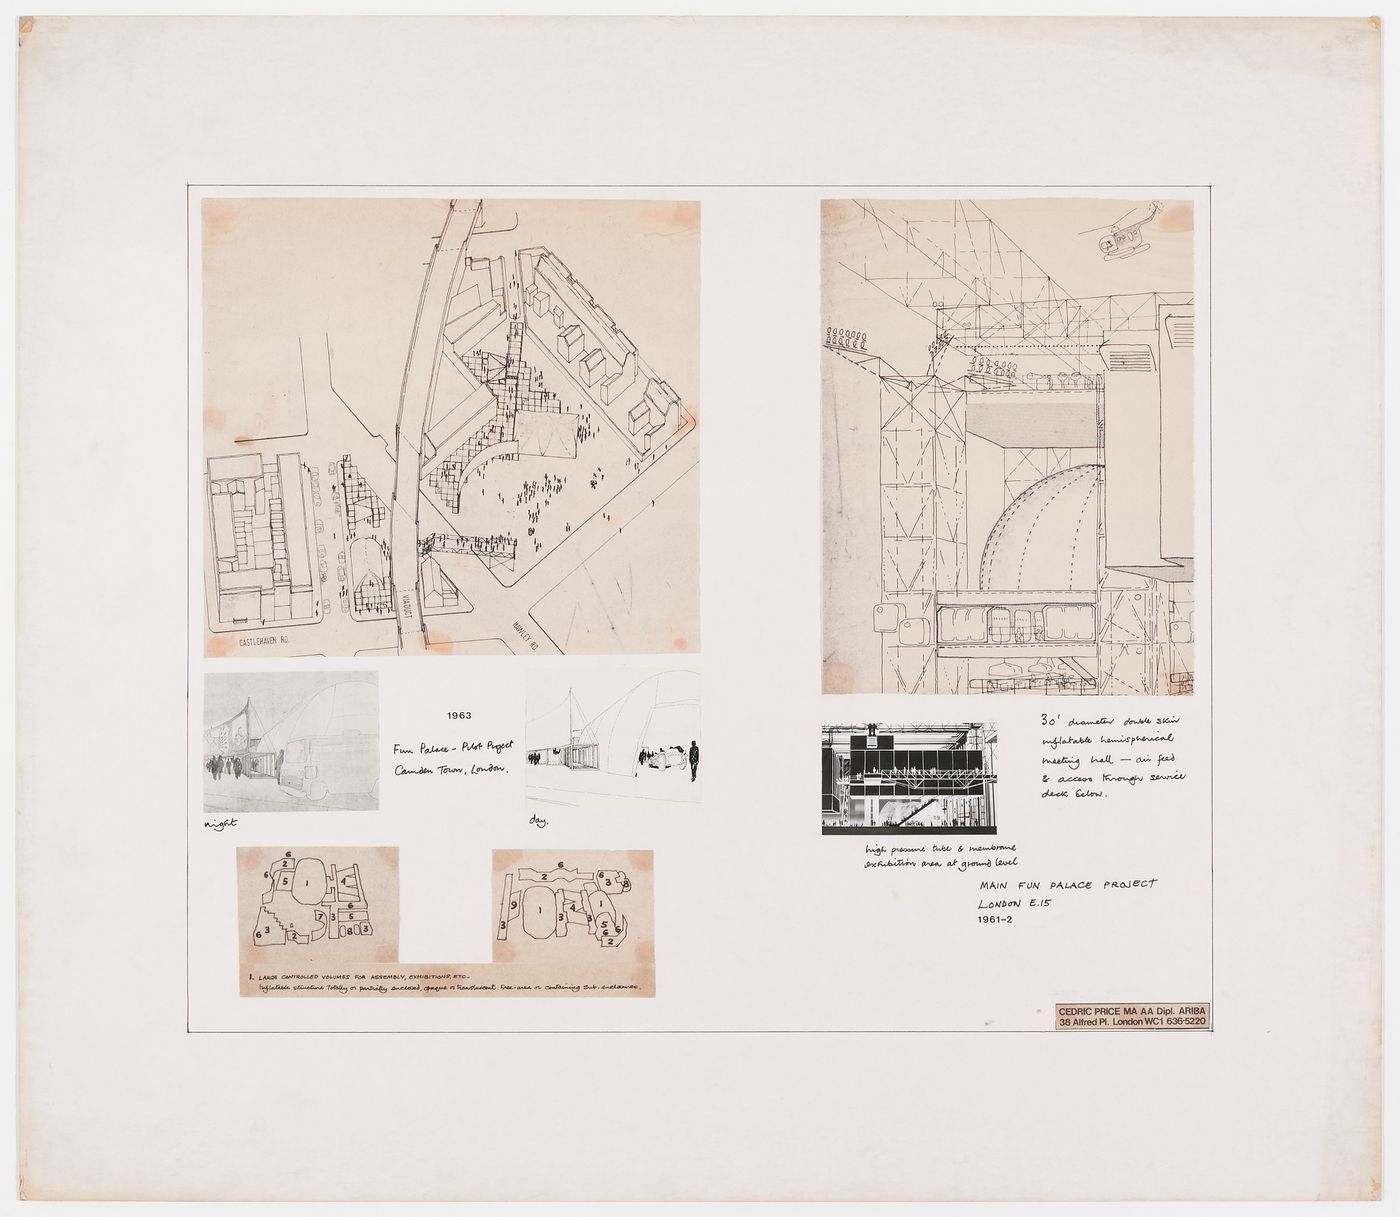 Presentation drawings for Fun Palace Pilot Project, Camden Town, London, 1963, and Main Fun Palace Project, London E.15, 1961-1962